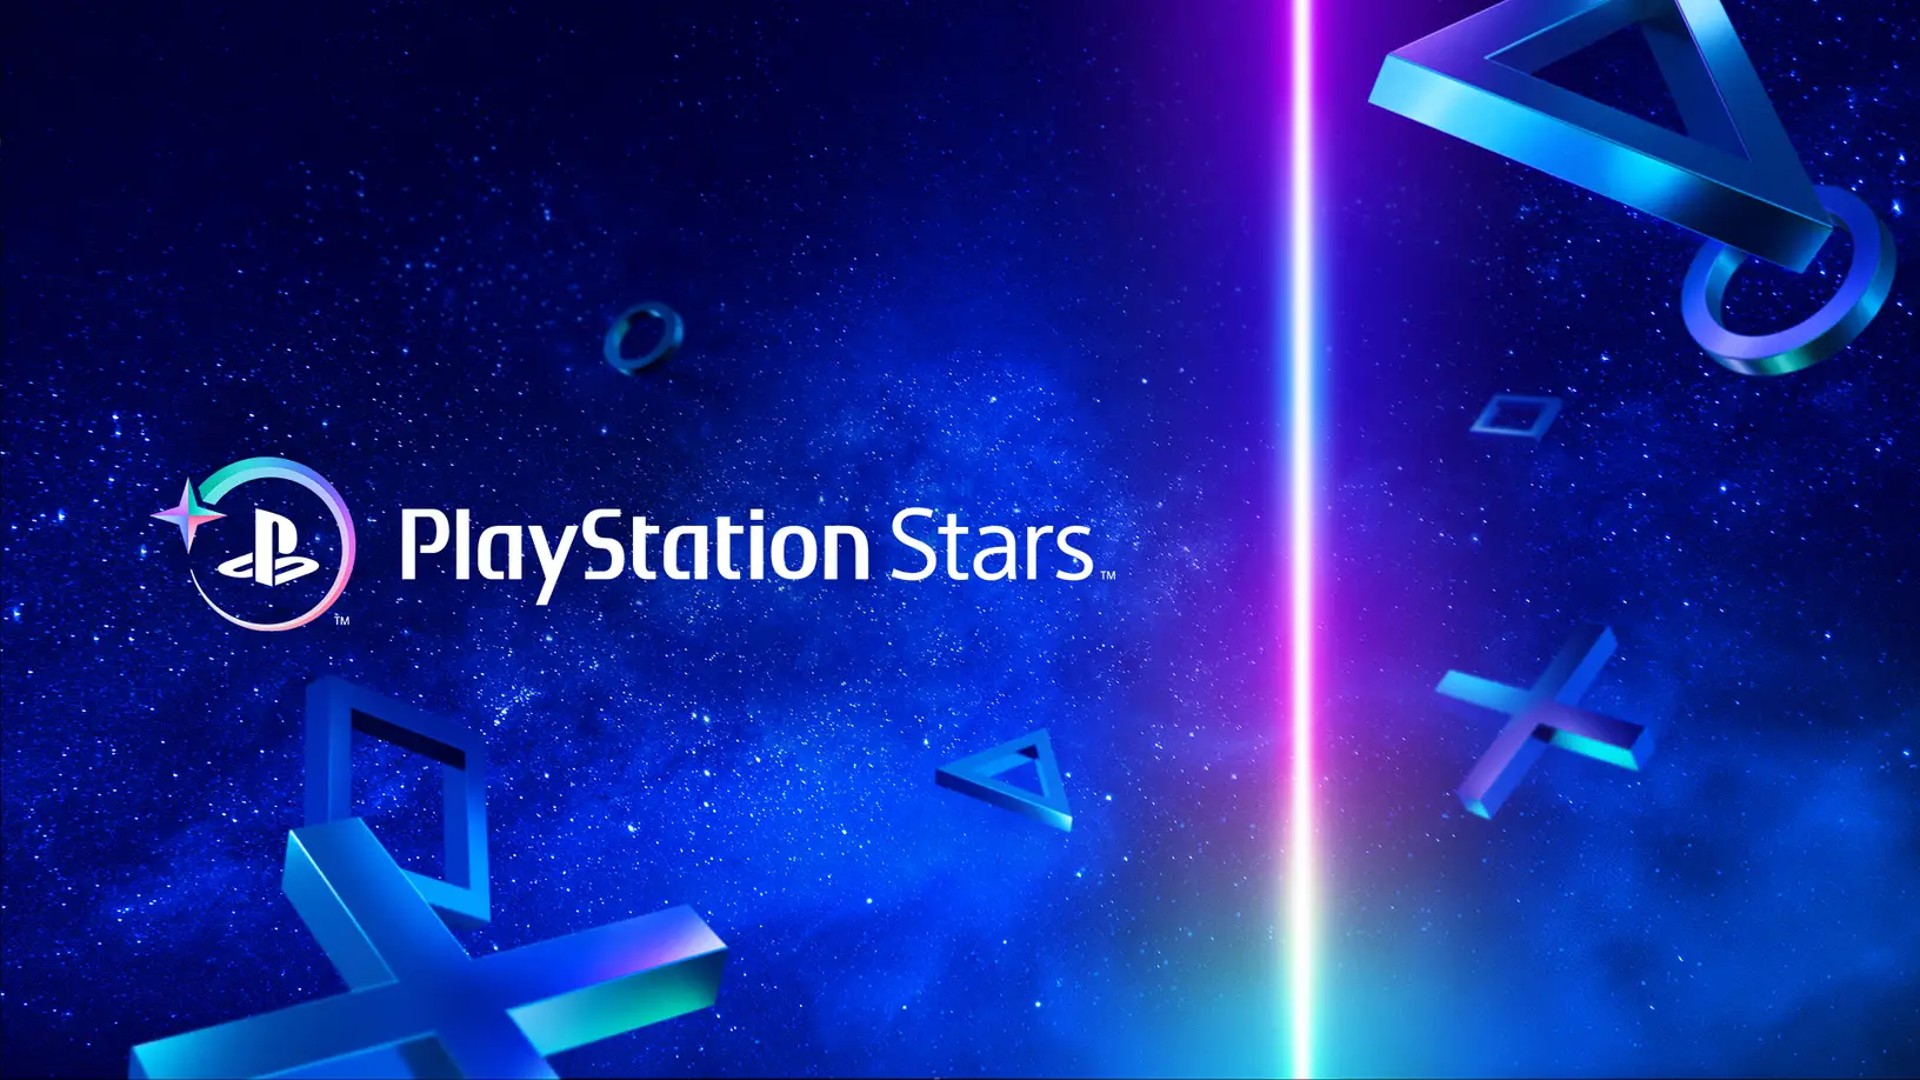 Sony เปิดตัวฟีเจอร์ใหม่ ‘PlayStation Stars’ สะสมคะแนนเพื่อรับของรางวัลสุดพิเศษ